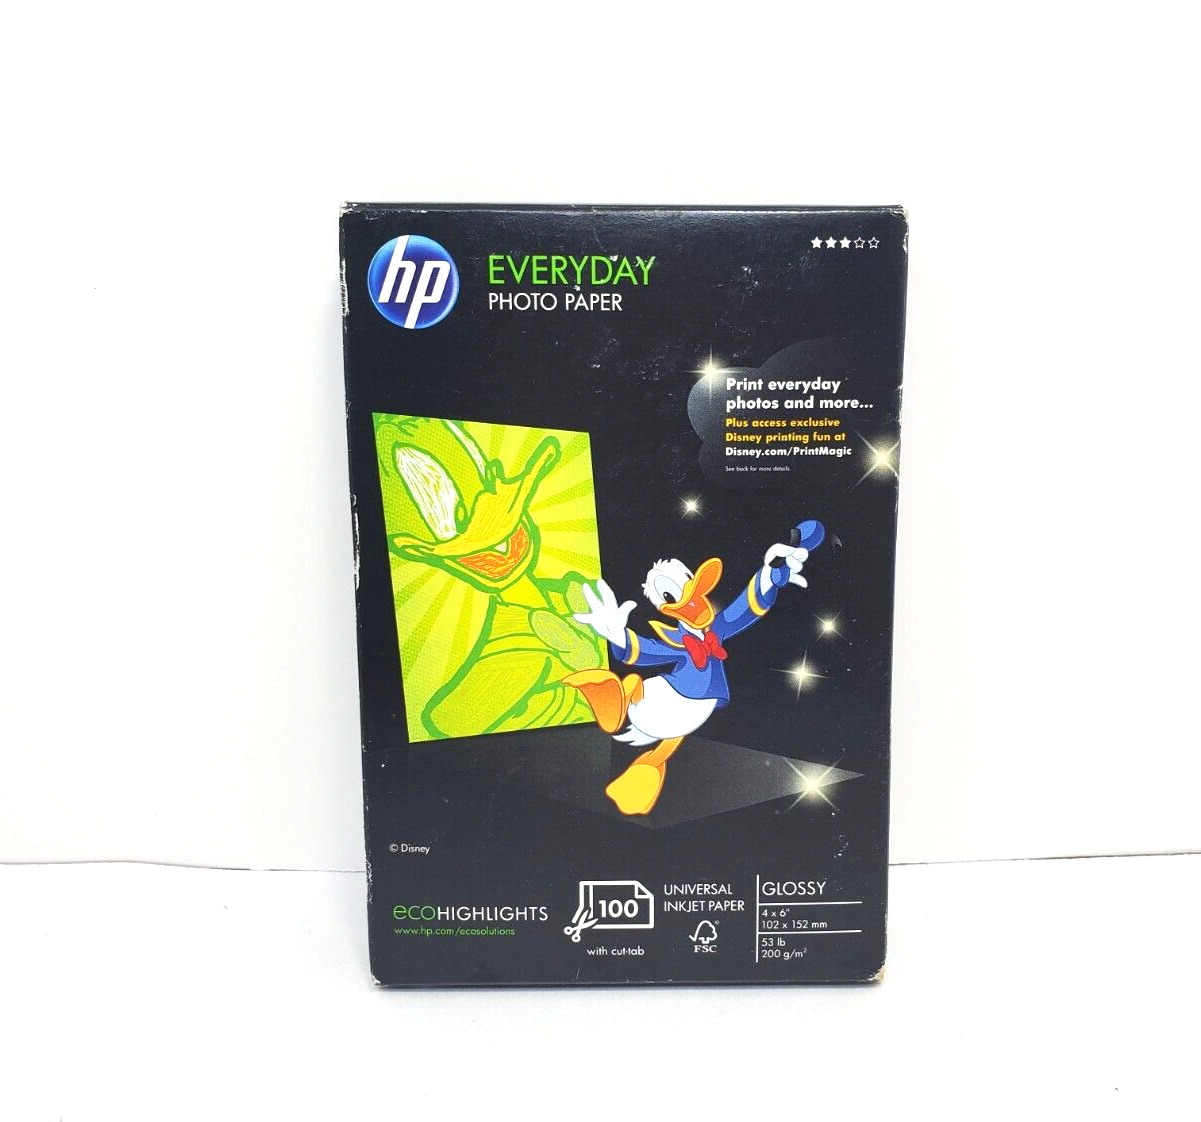 HP Everyday Photo Paper 100 sheet Universal Inkjet Glossy 4x6 Disney Picture NEW